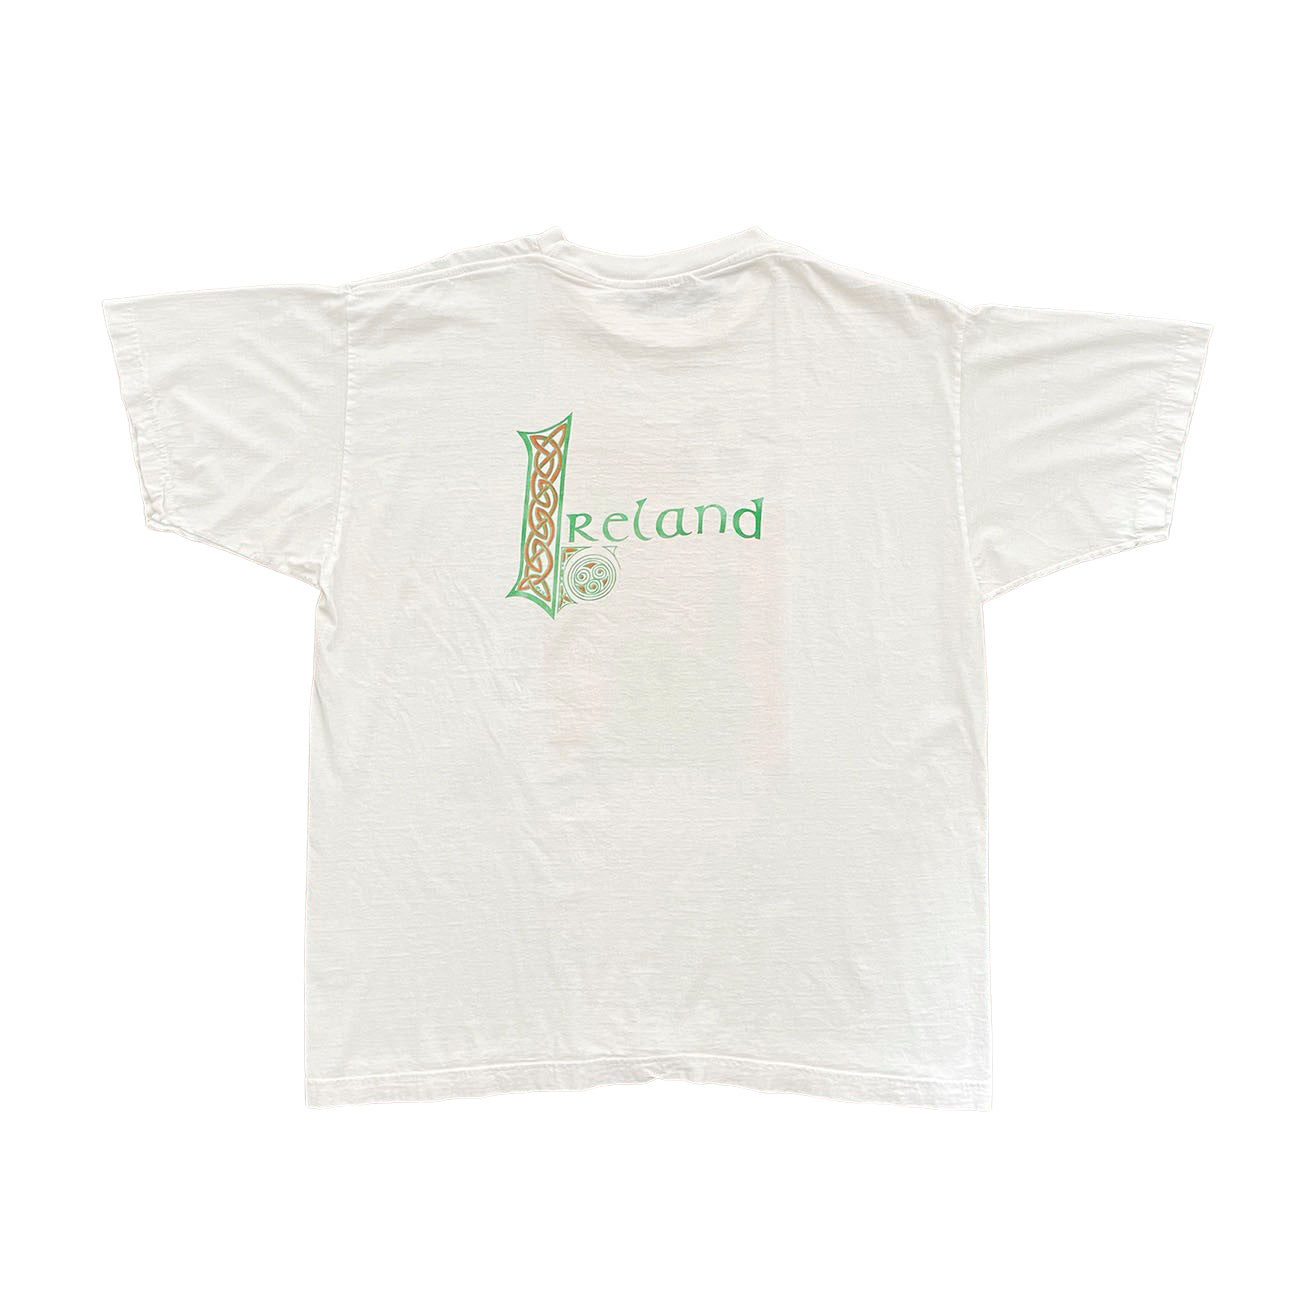 World Cup 94 Ireland NYC T-Shirt - L